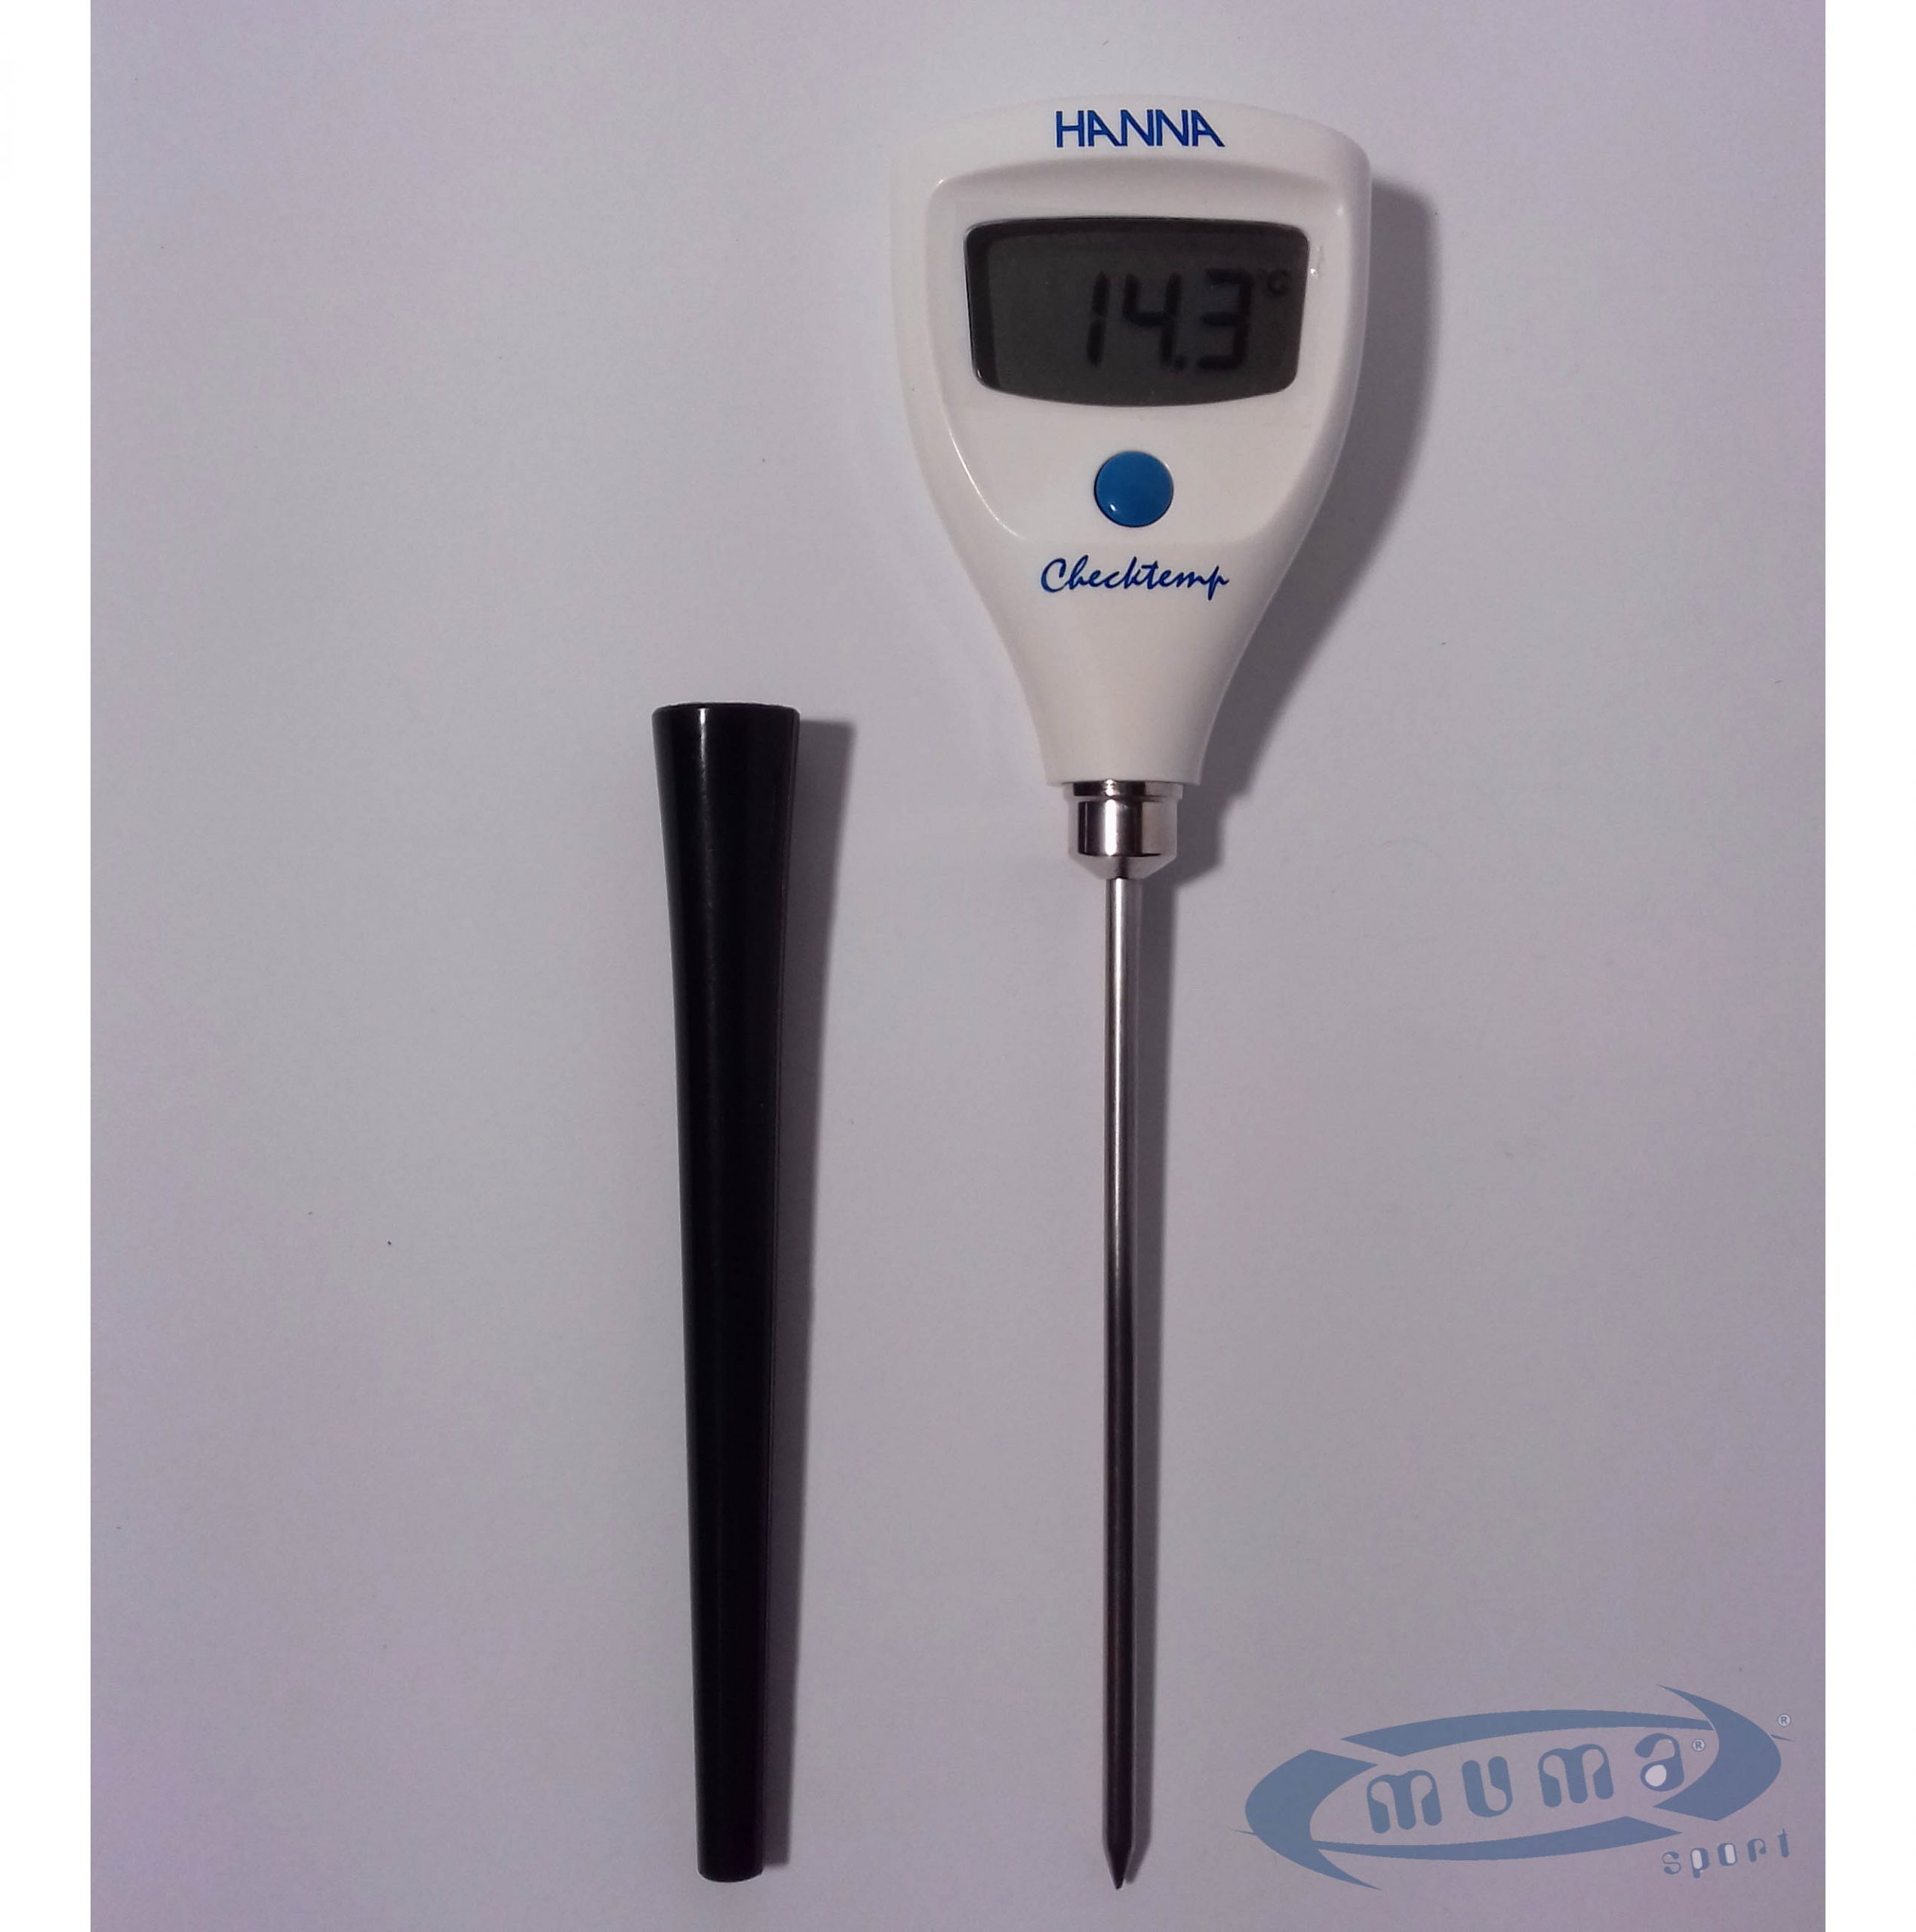 Checktemp® termometro digitale - HI98501